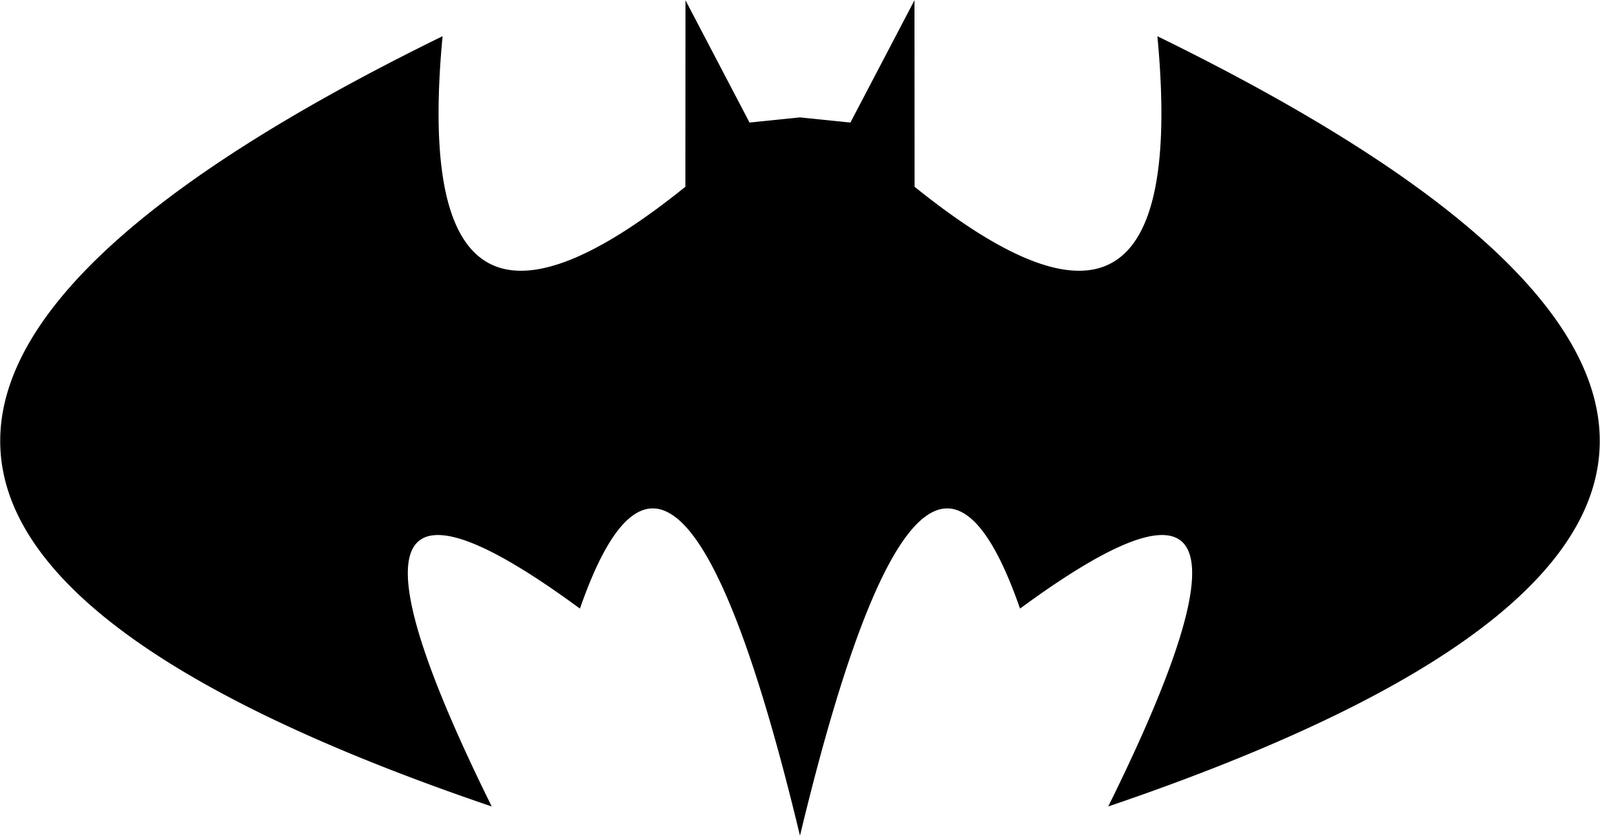 denizignko: Justice League logo (free download vectors)